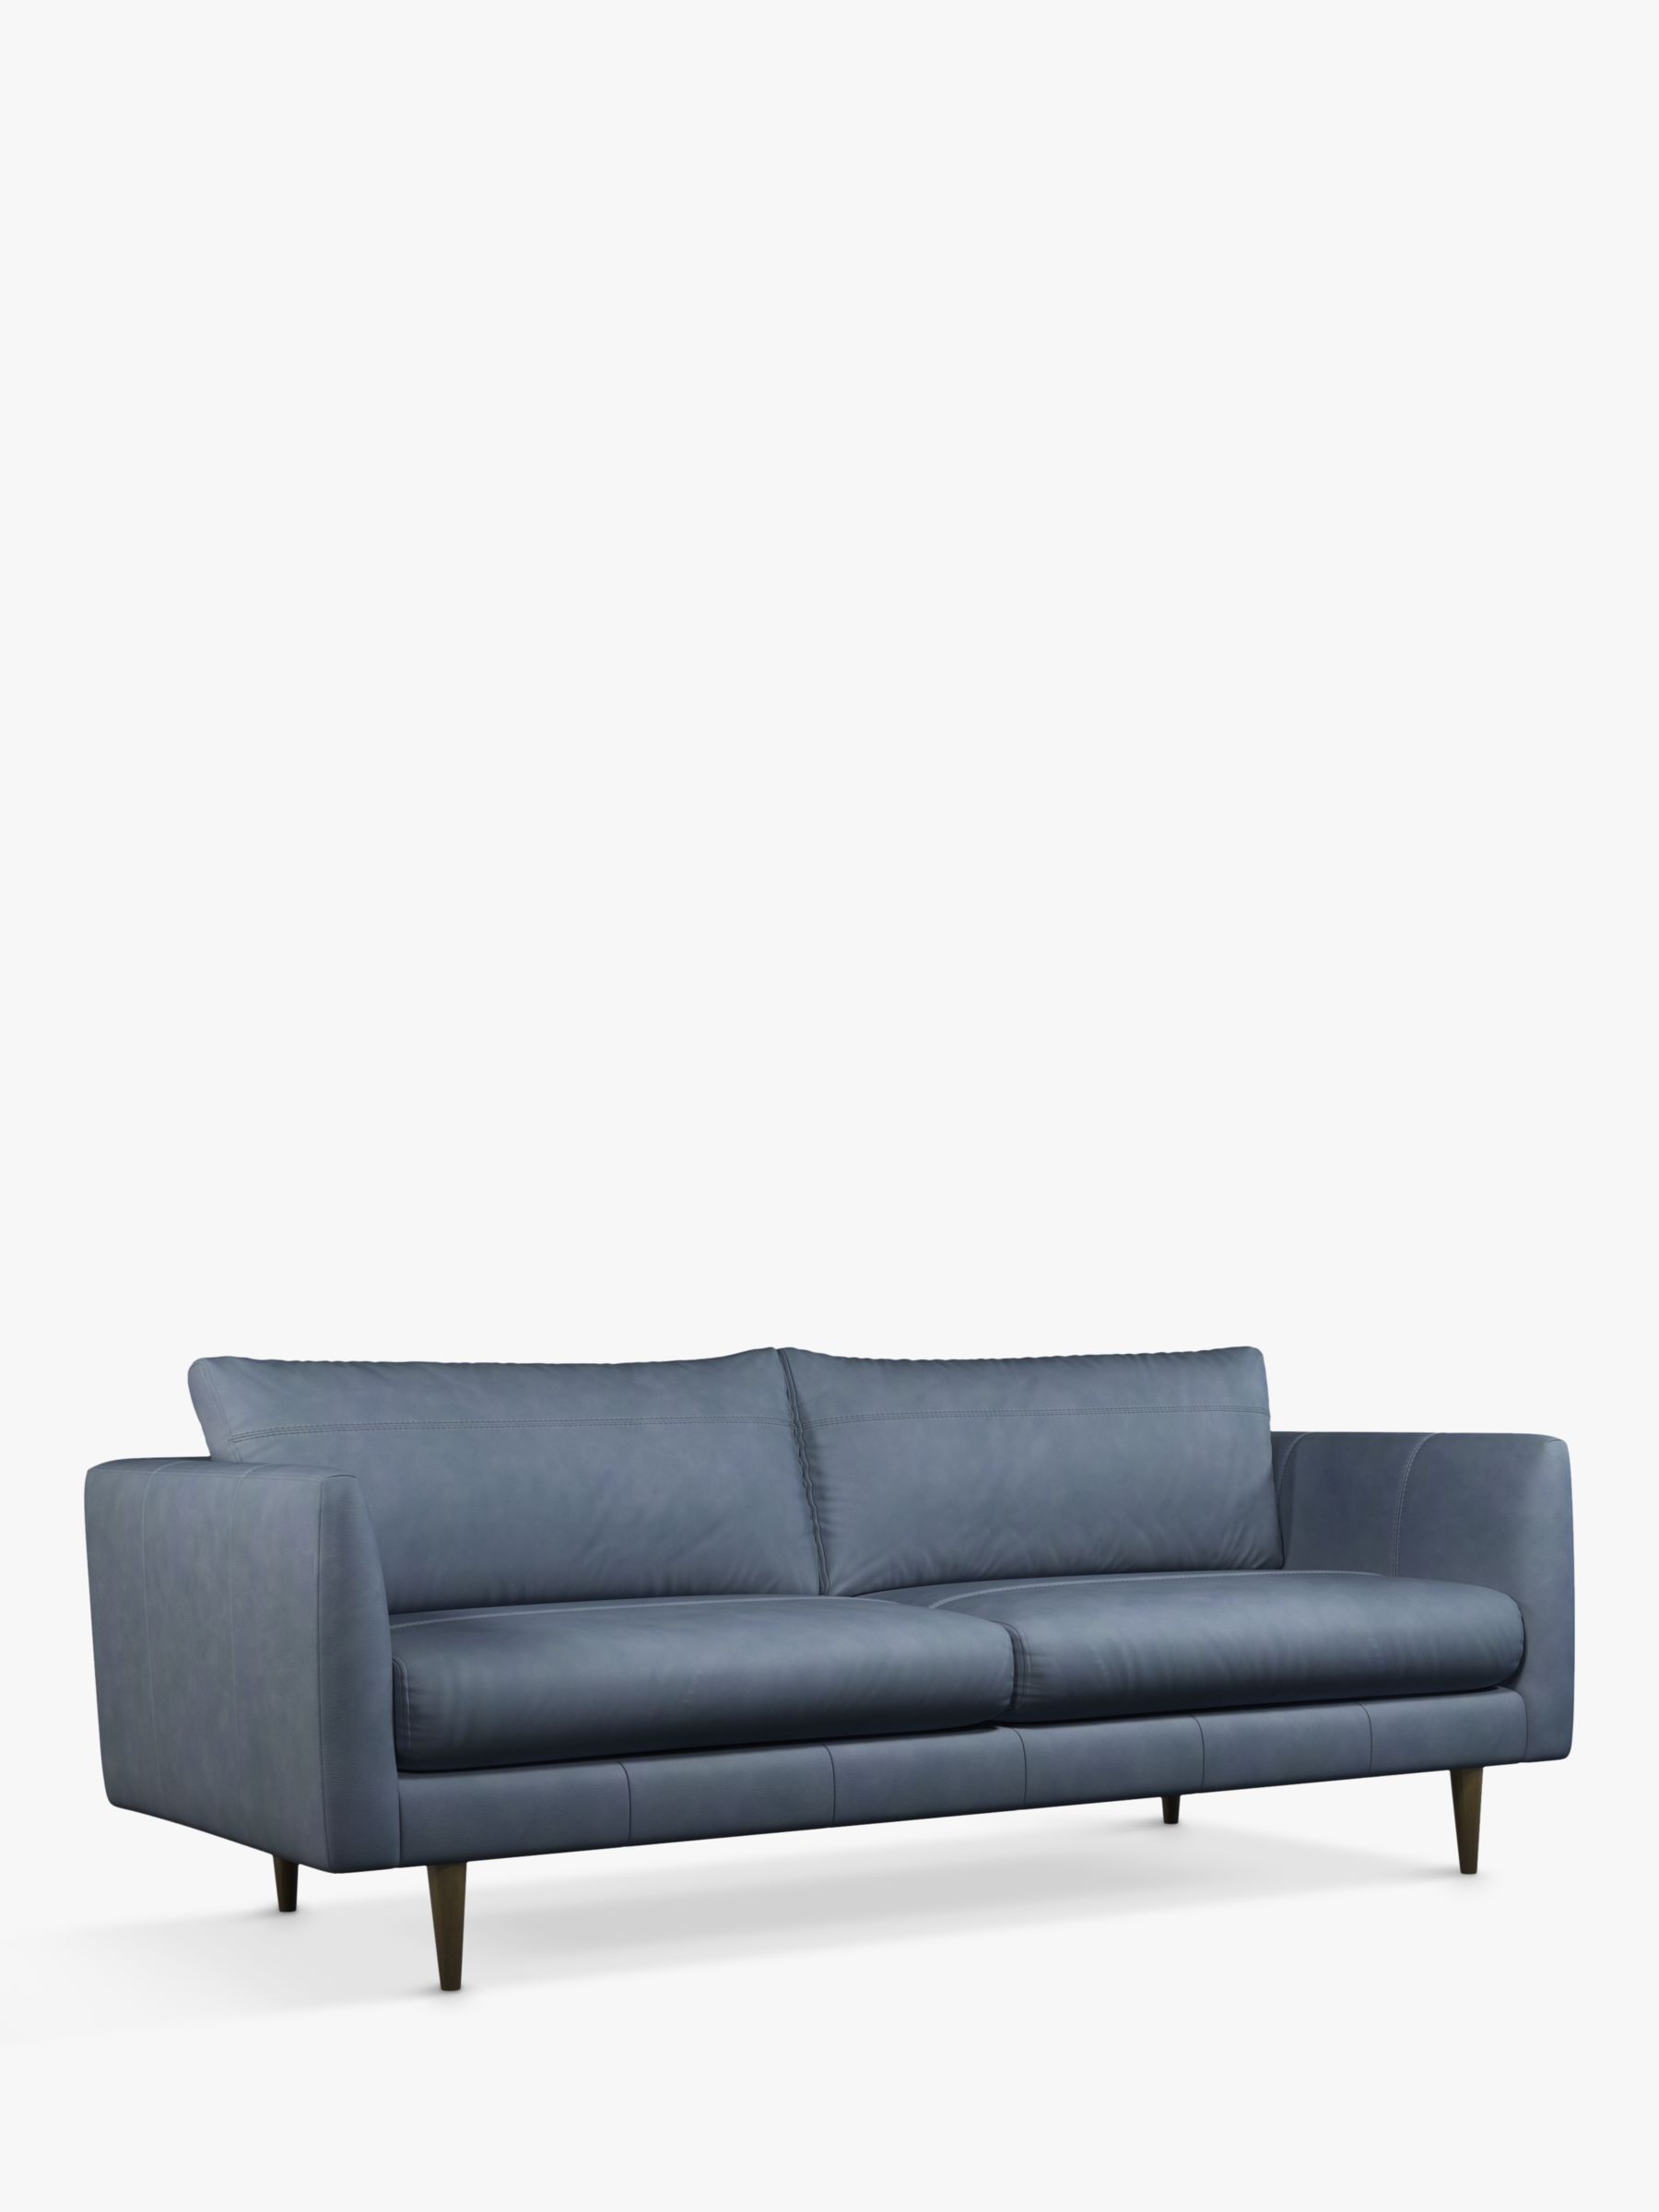 John Lewis + Swoon Latimer Large 3 Seater Leather Sofa